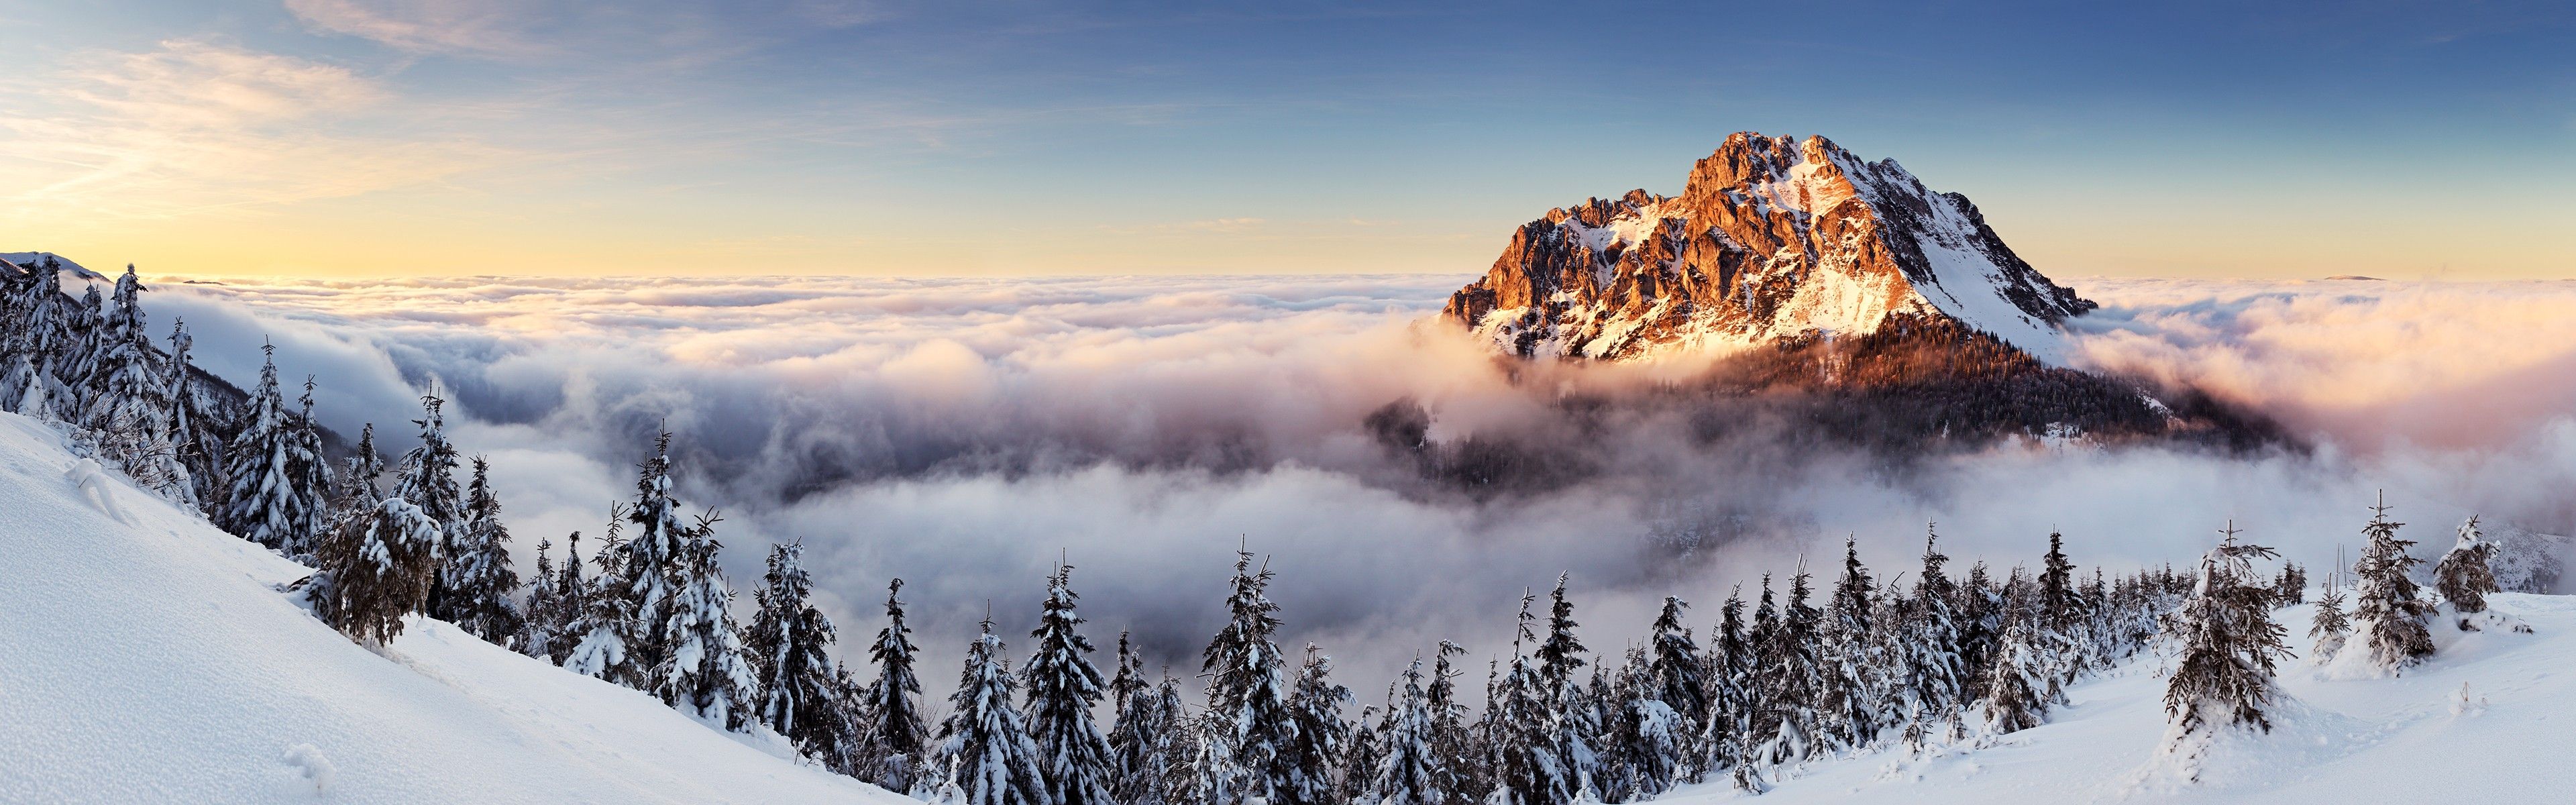 landscape, mountains, mist, pine trees, winter, Slovakia, multiple display, dual monitorsx1200 Wallpaper